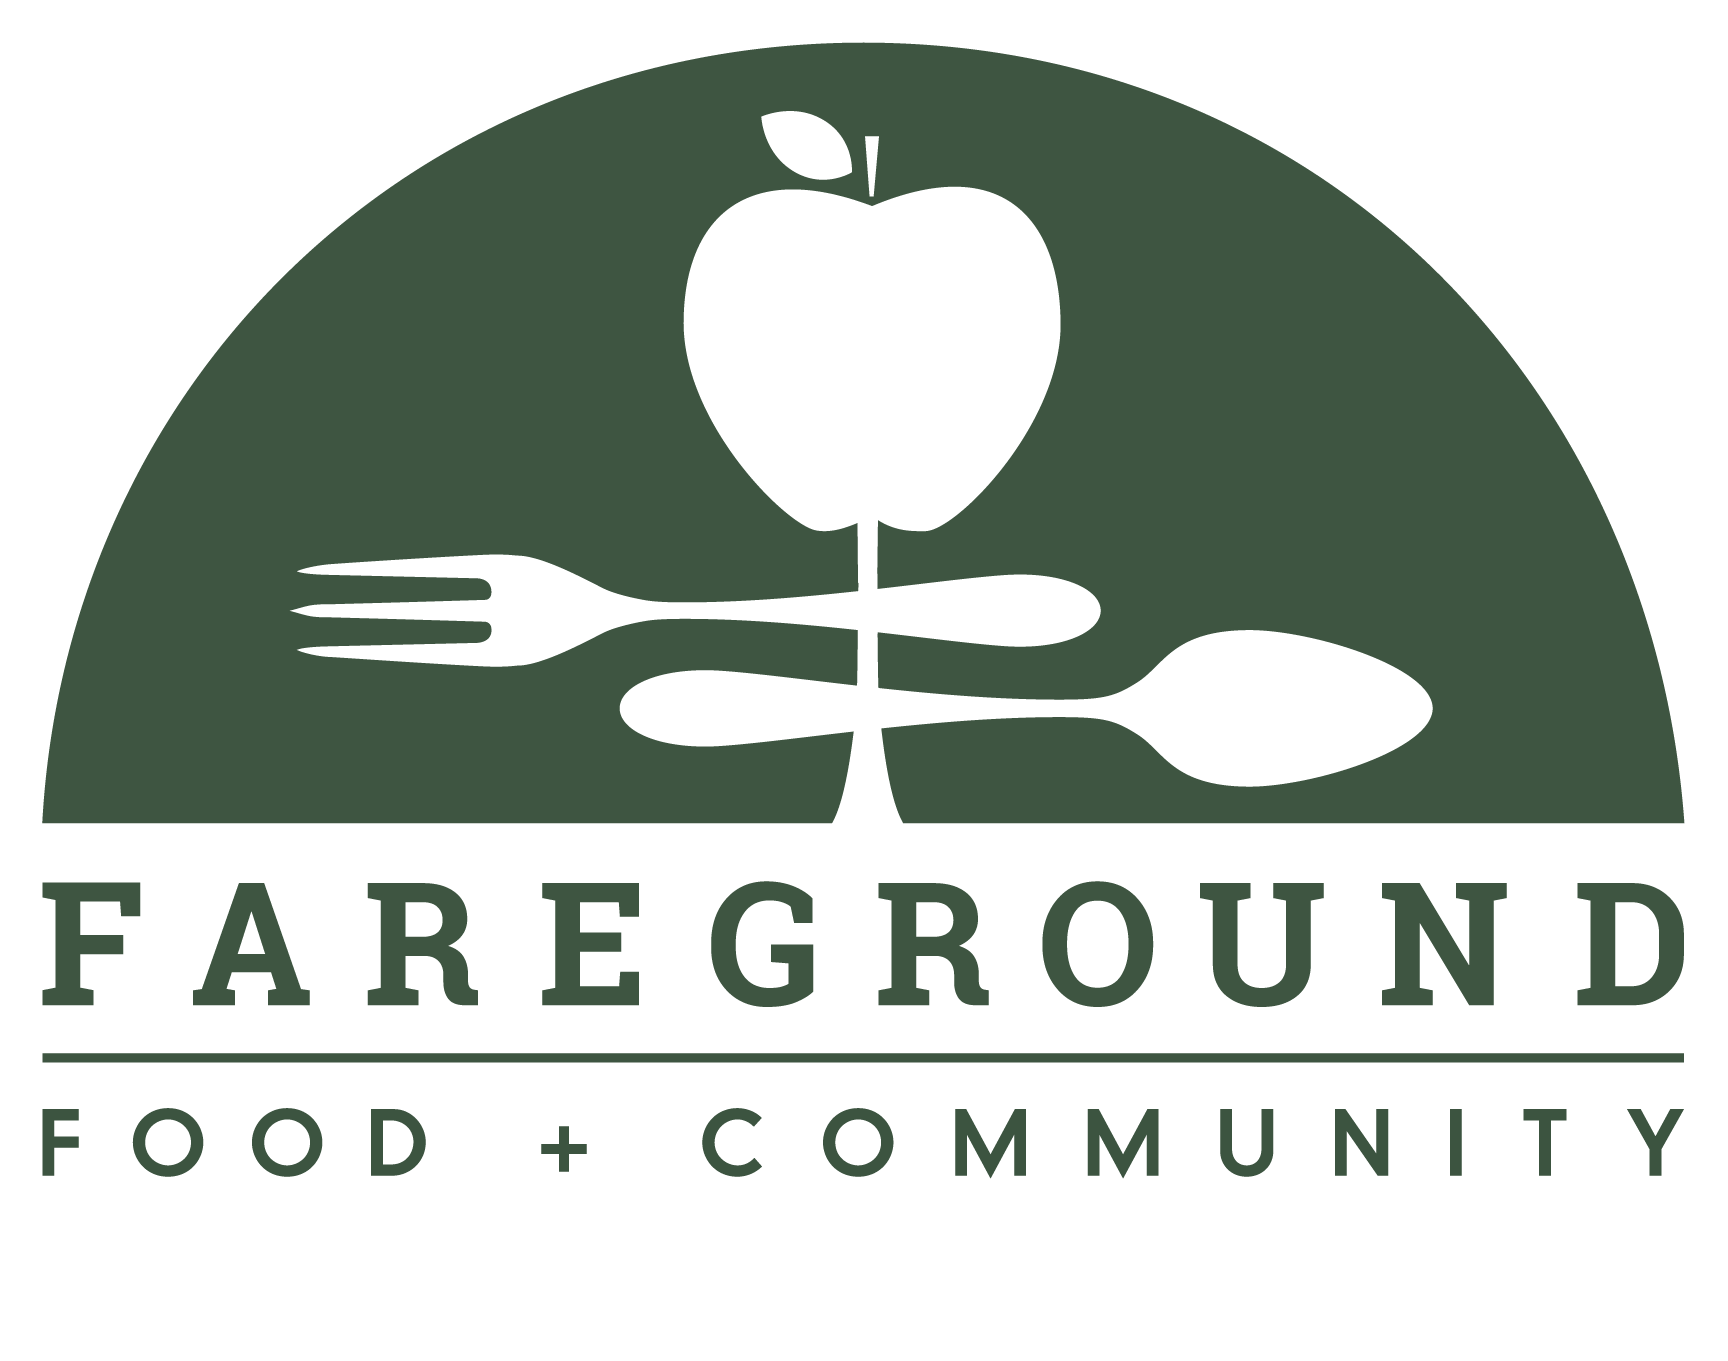 FAREGROUND FOOD + COMMUNITY